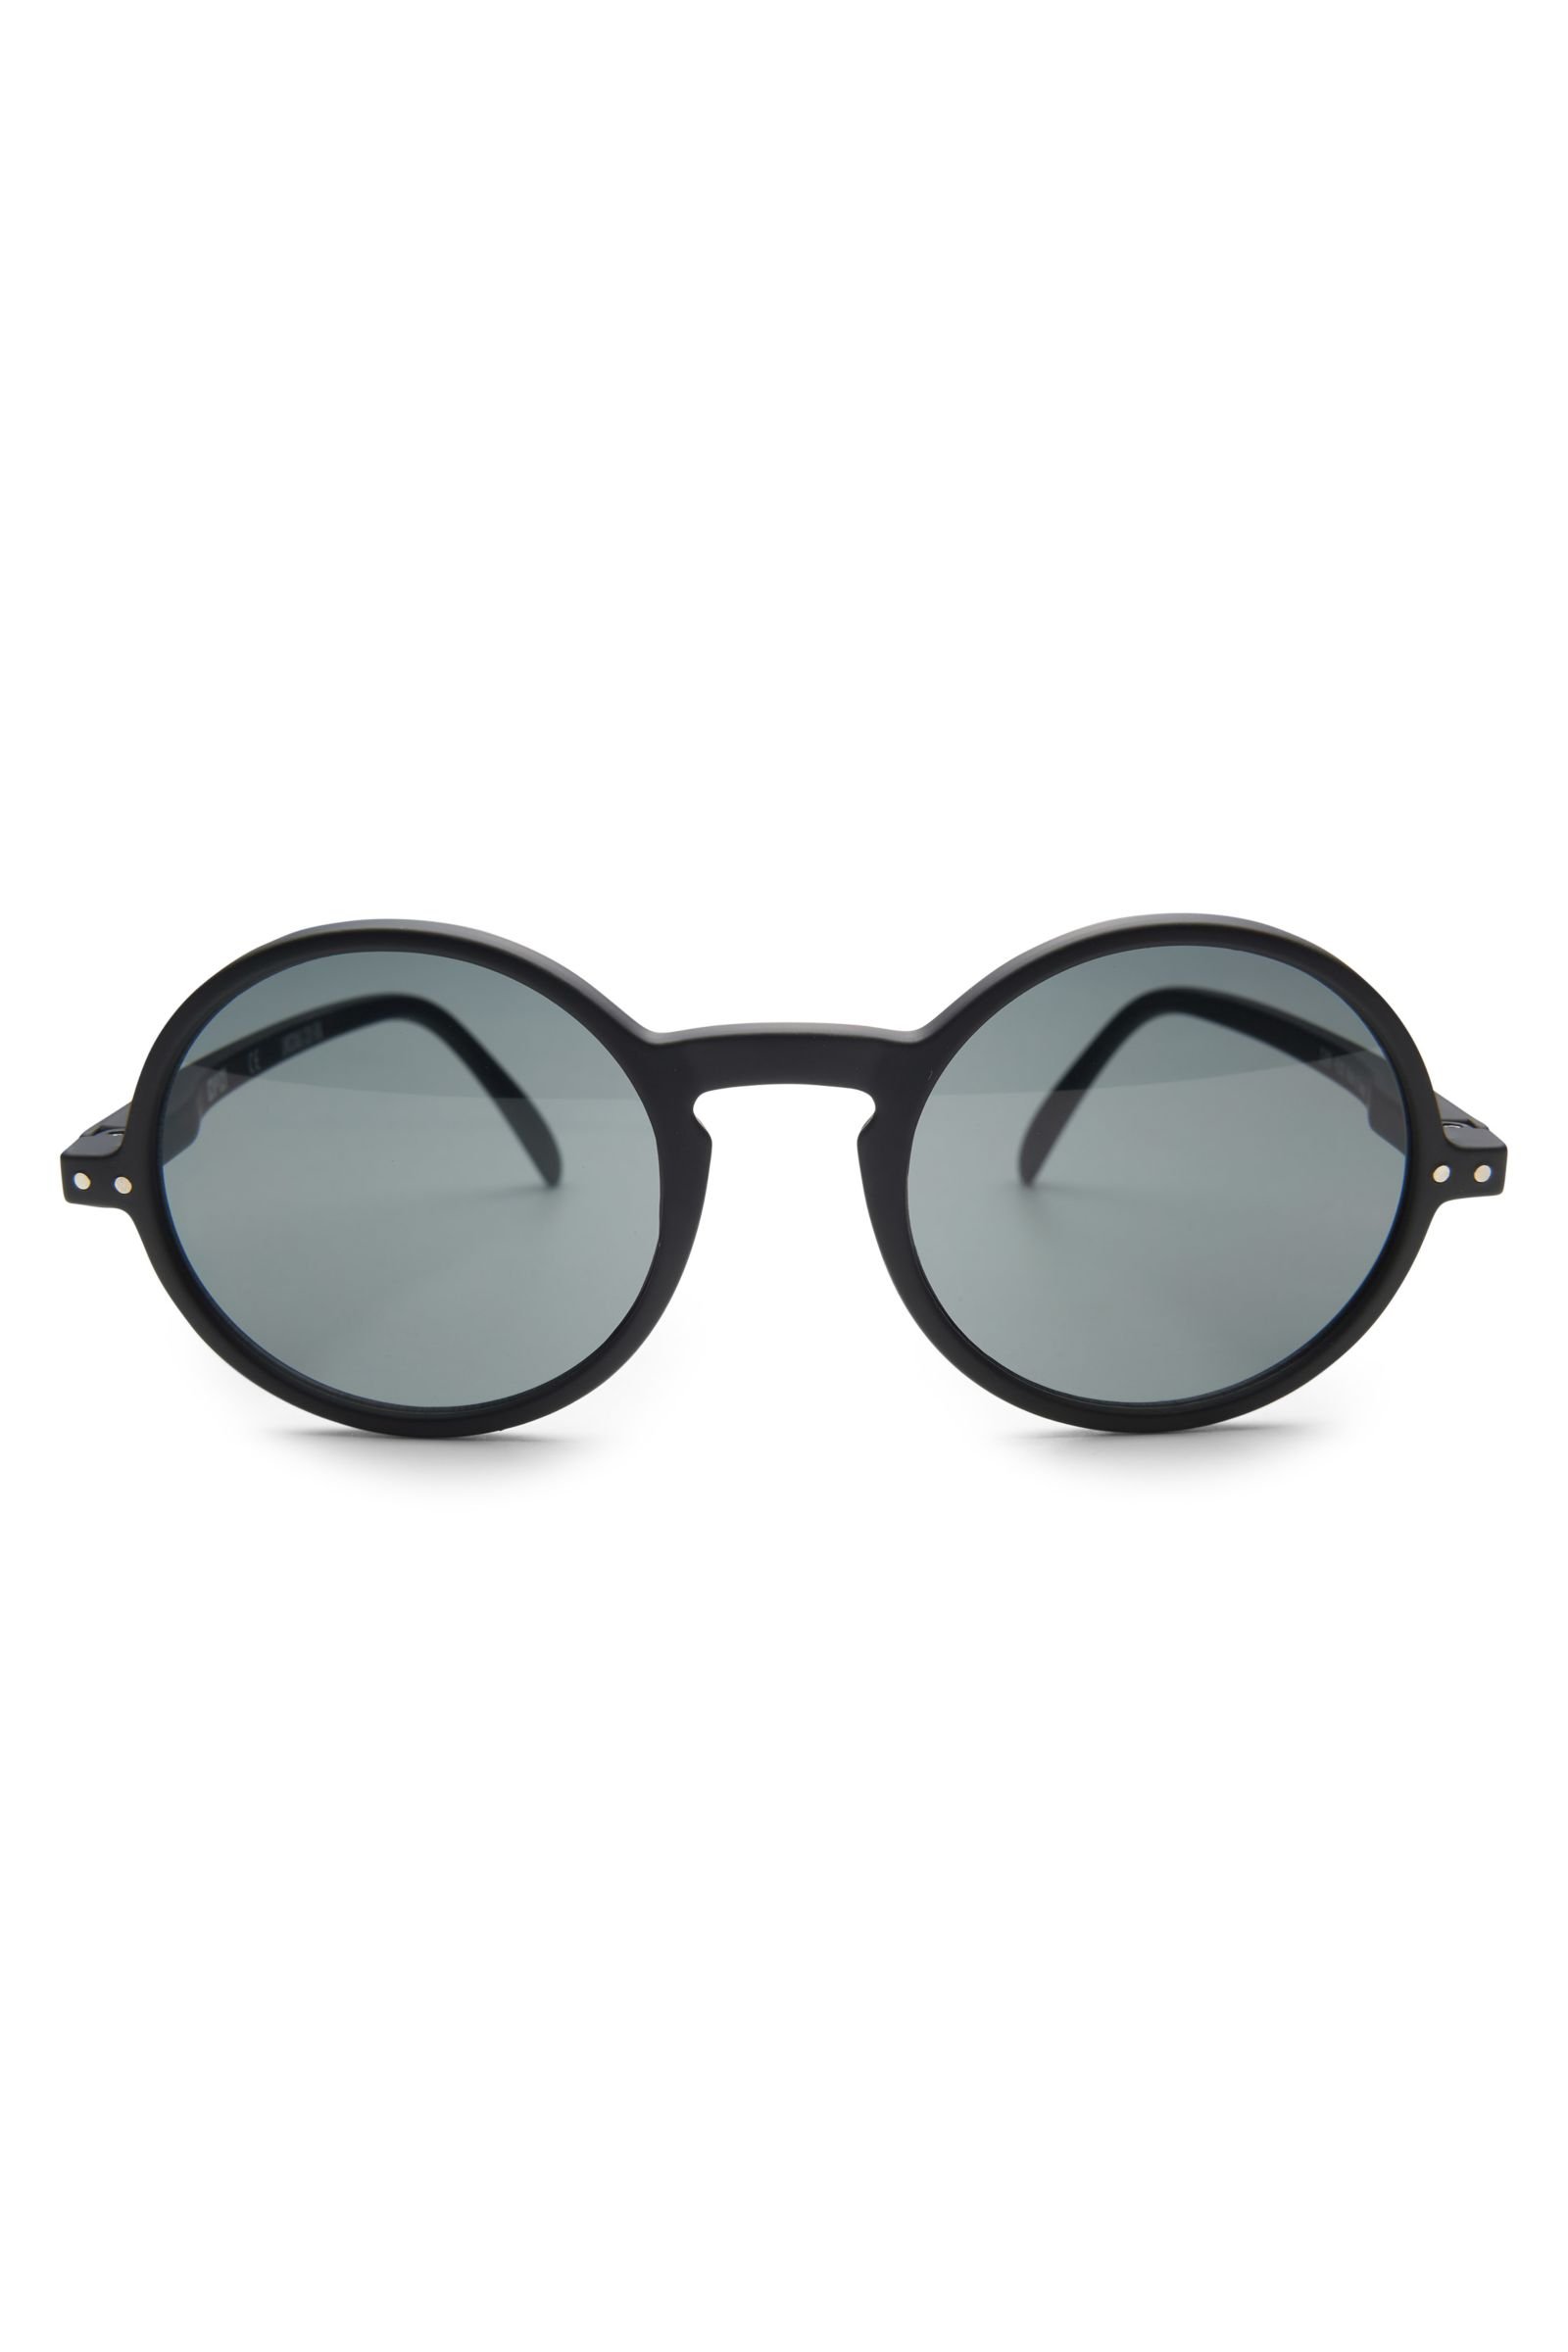 Sunglasses '#G Sun' black/grey